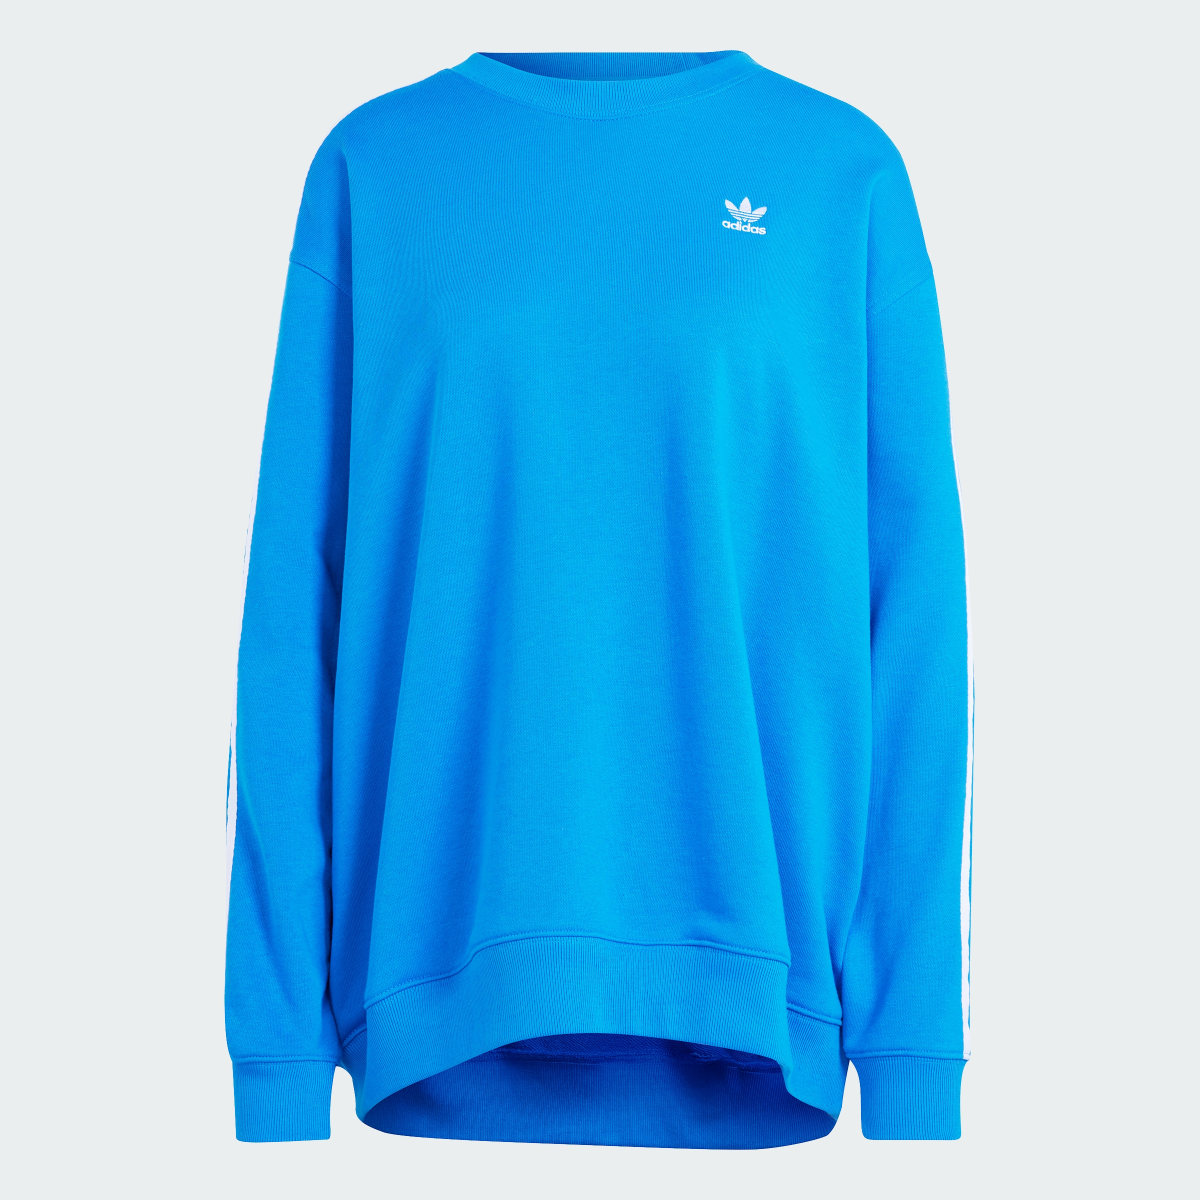 Adidas 3-Streifen Oversized Sweatshirt. 5